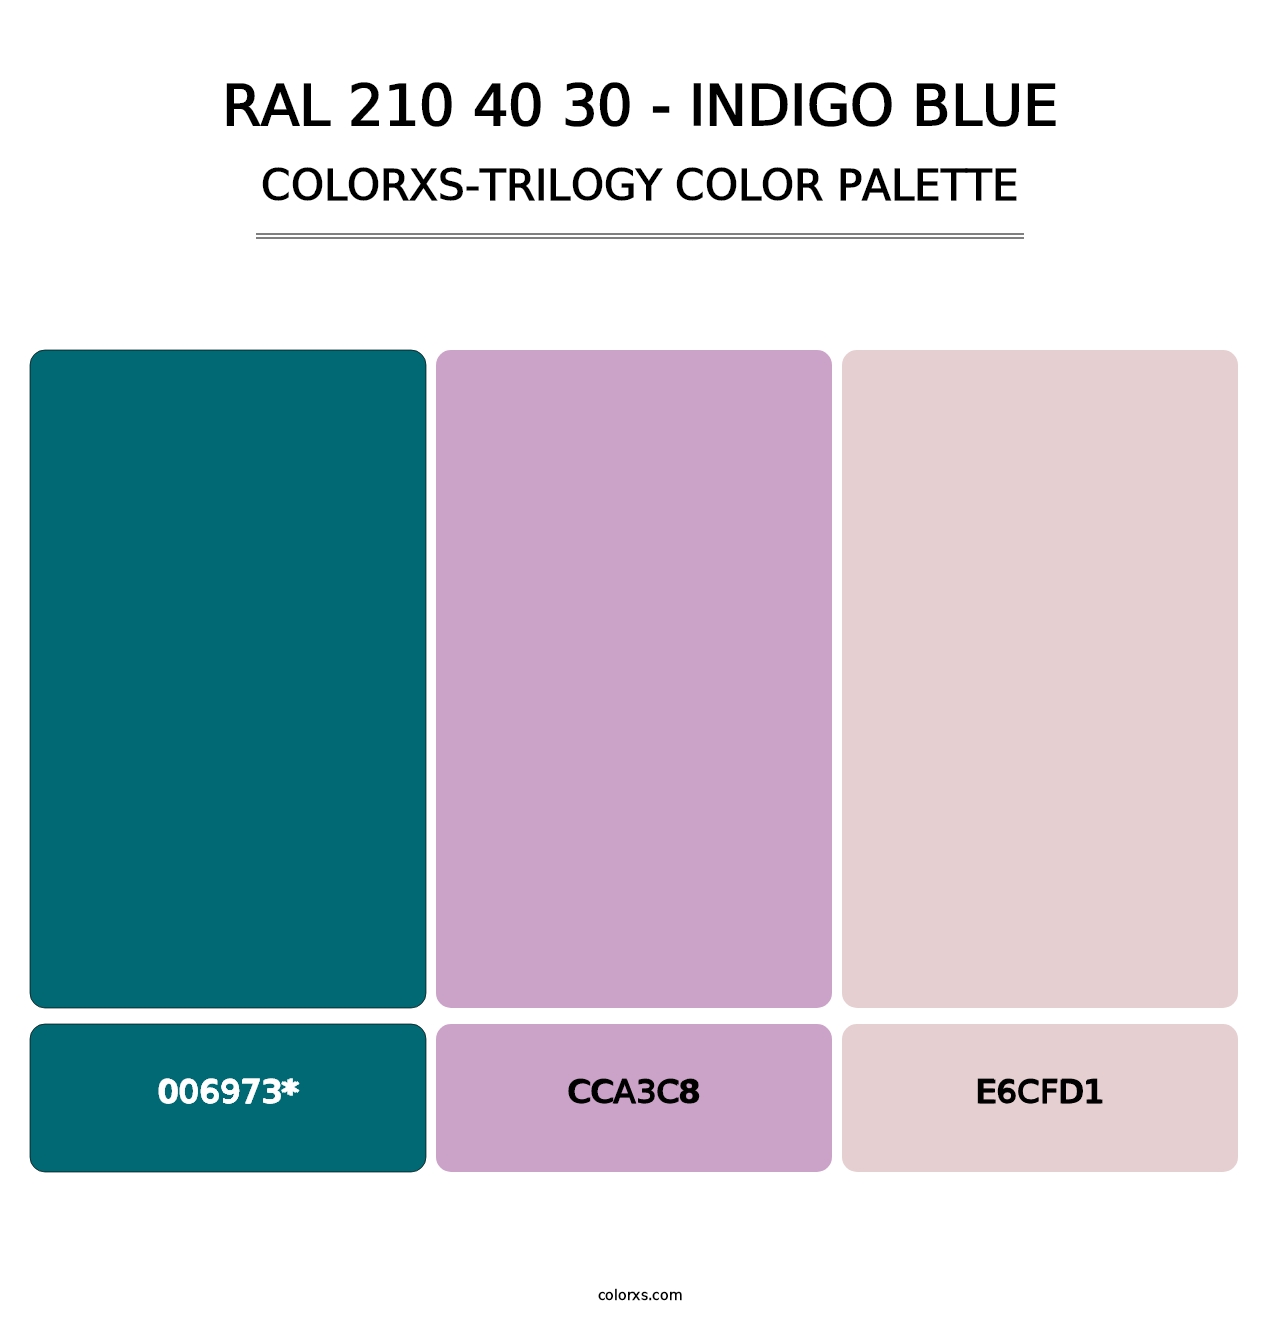 RAL 210 40 30 - Indigo Blue - Colorxs Trilogy Palette